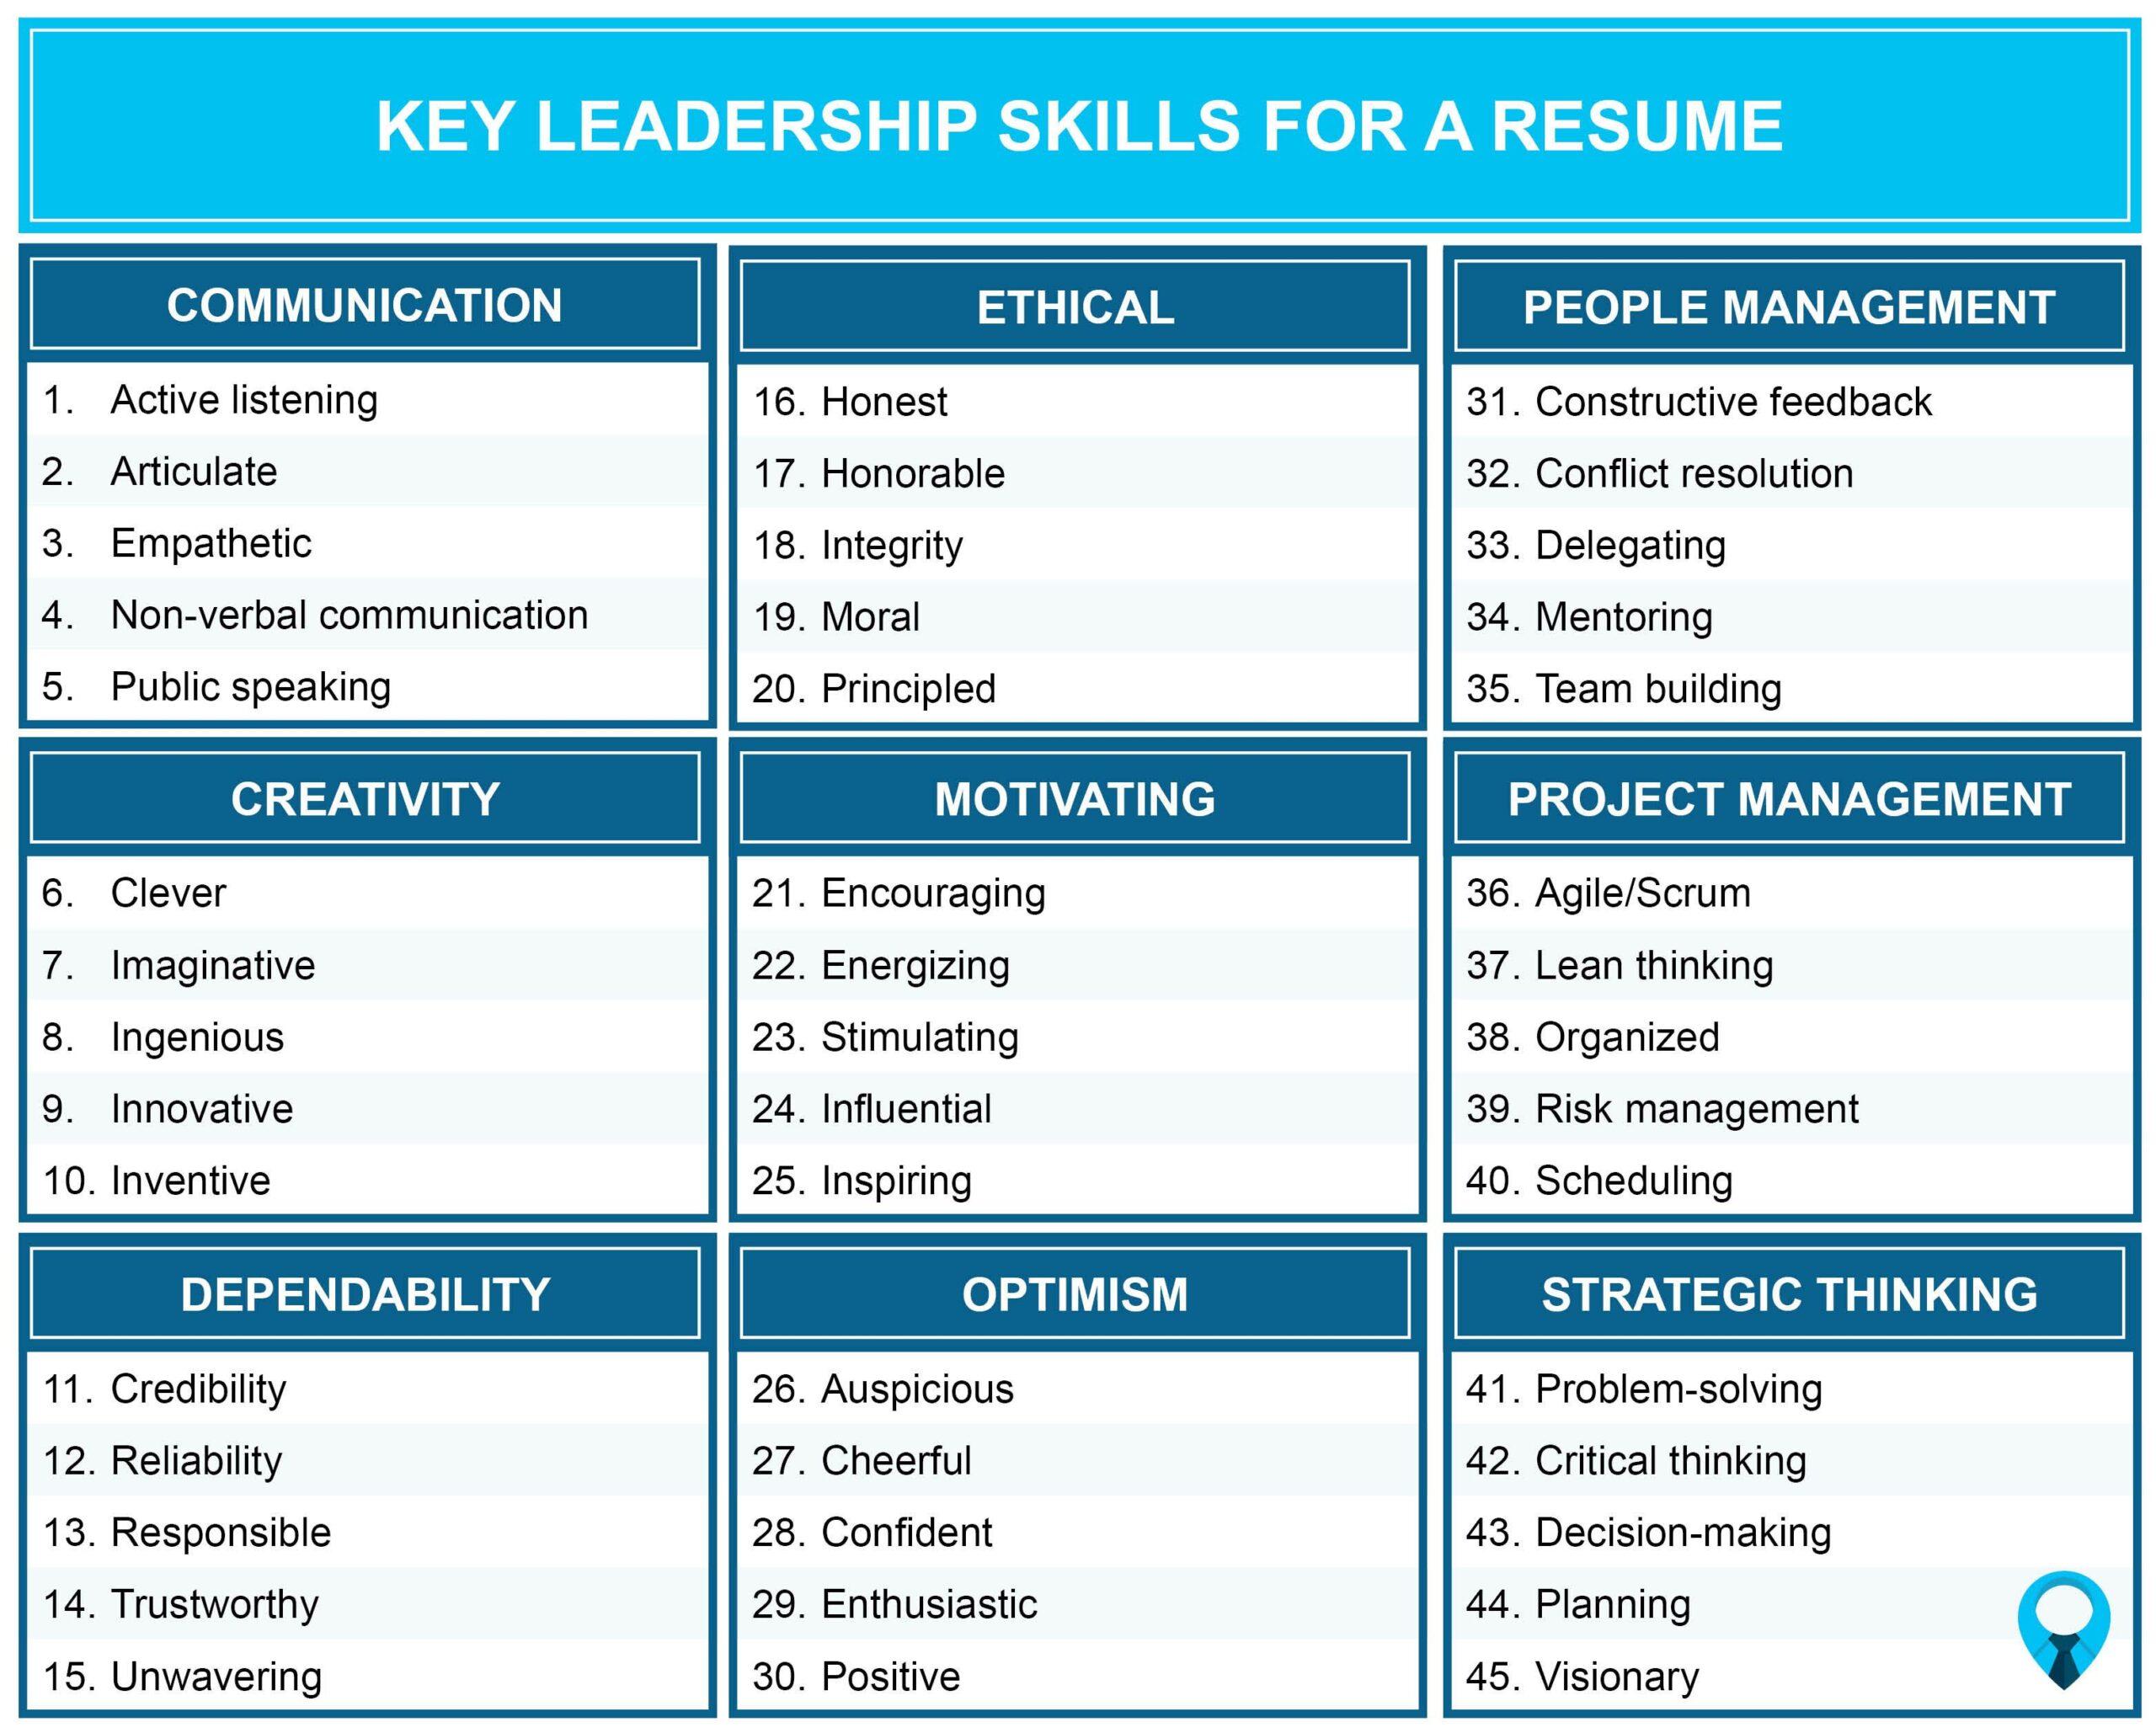 Key Leadership Skills for Resume